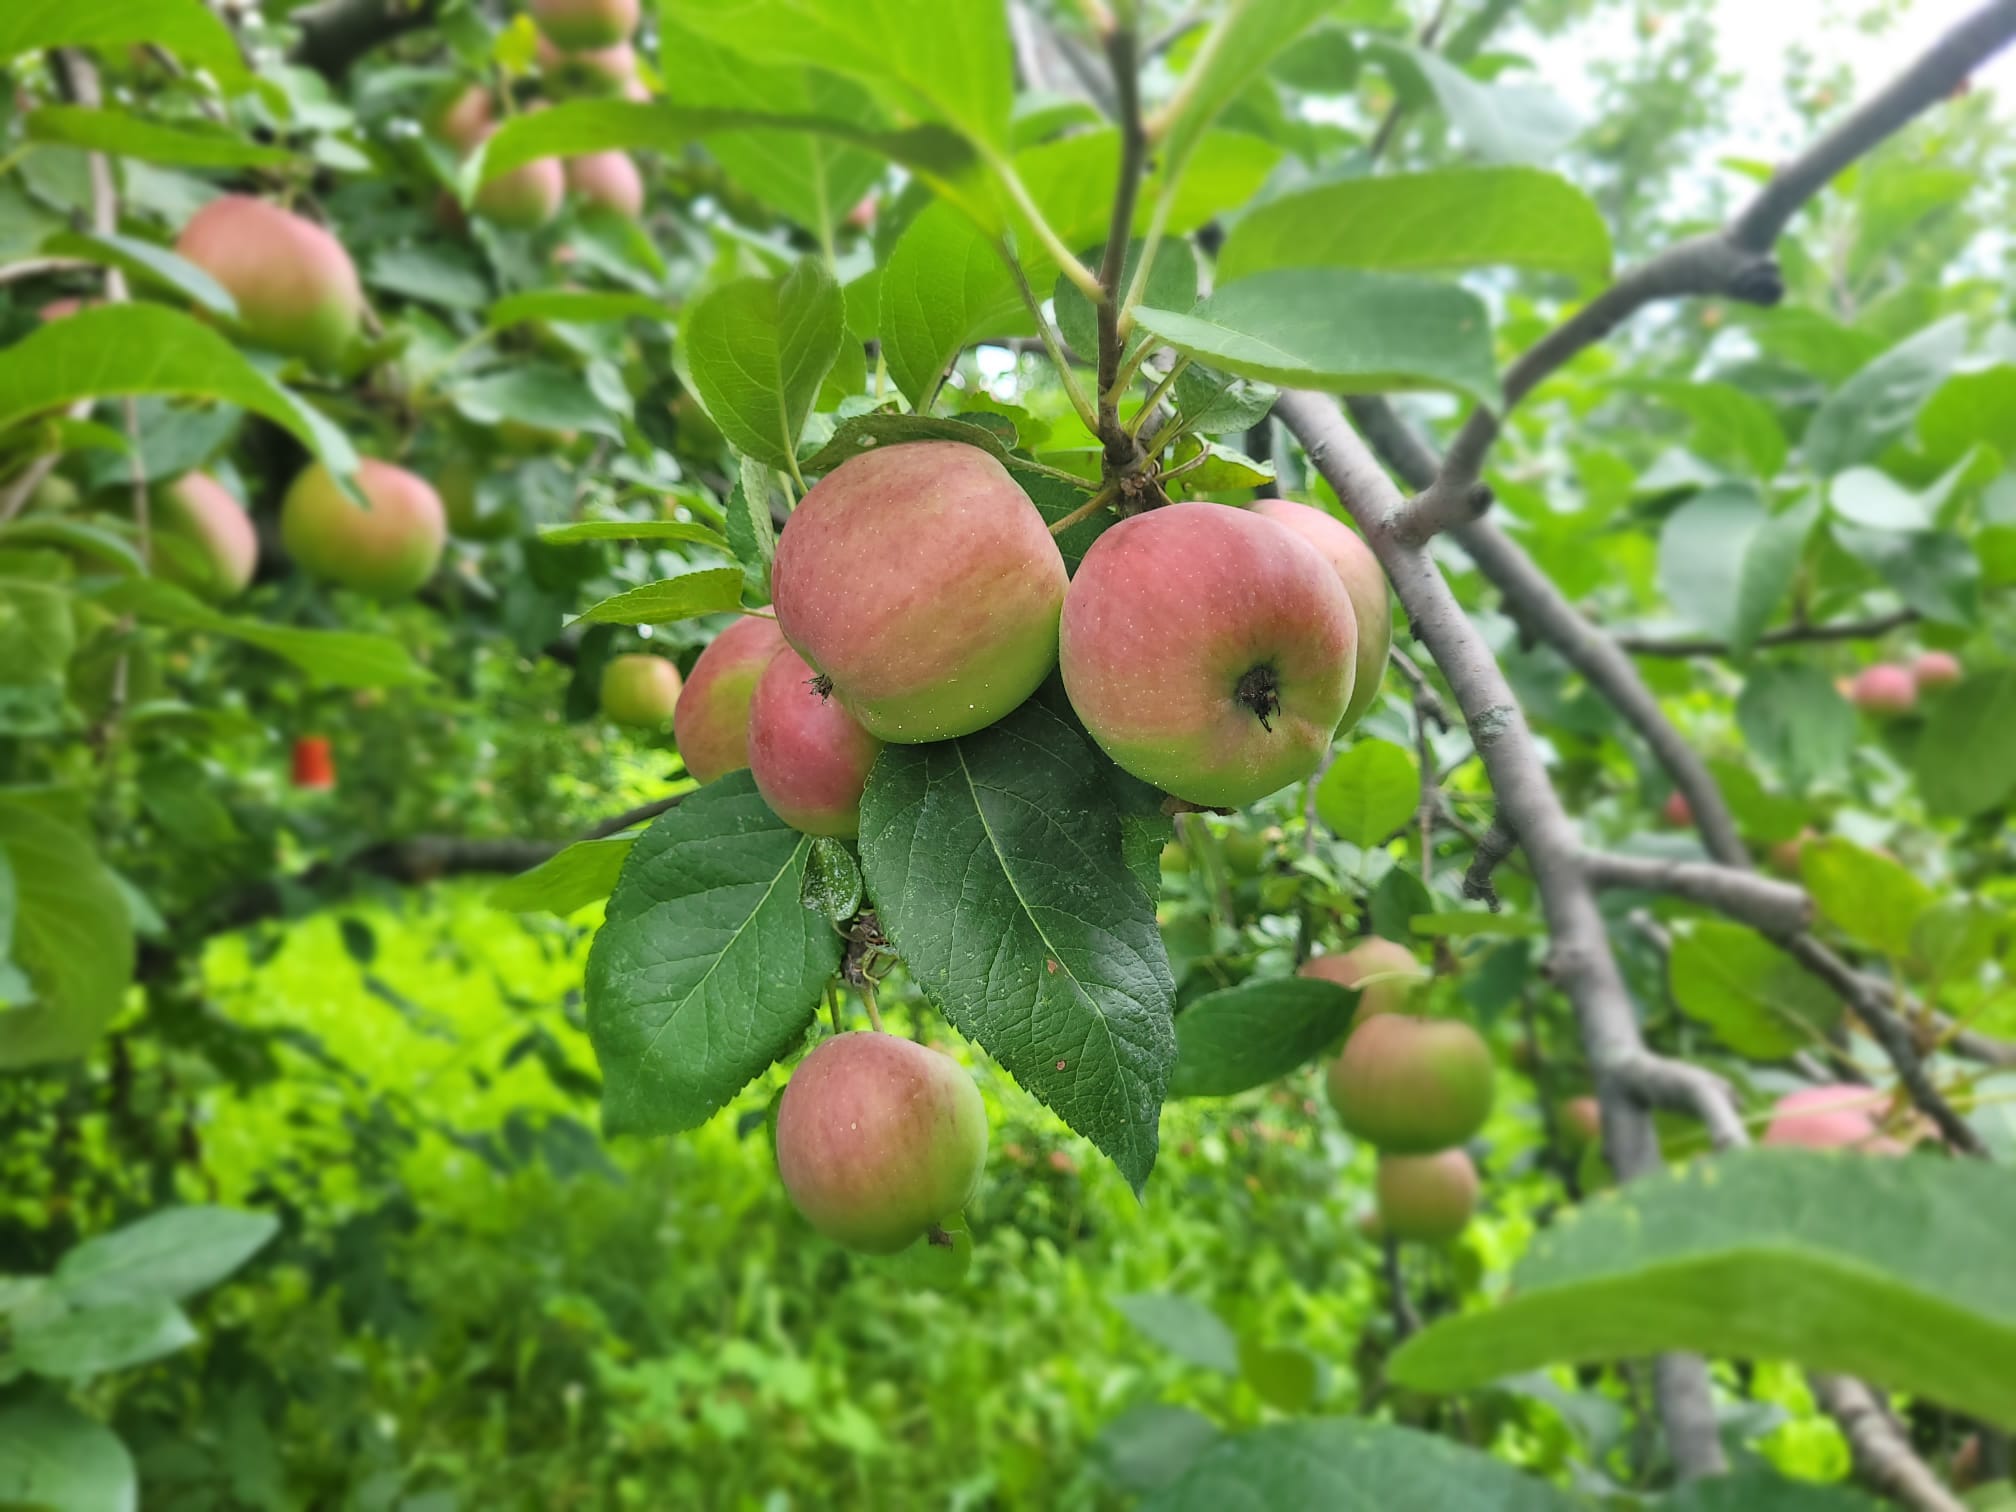 Apples ripening on tree